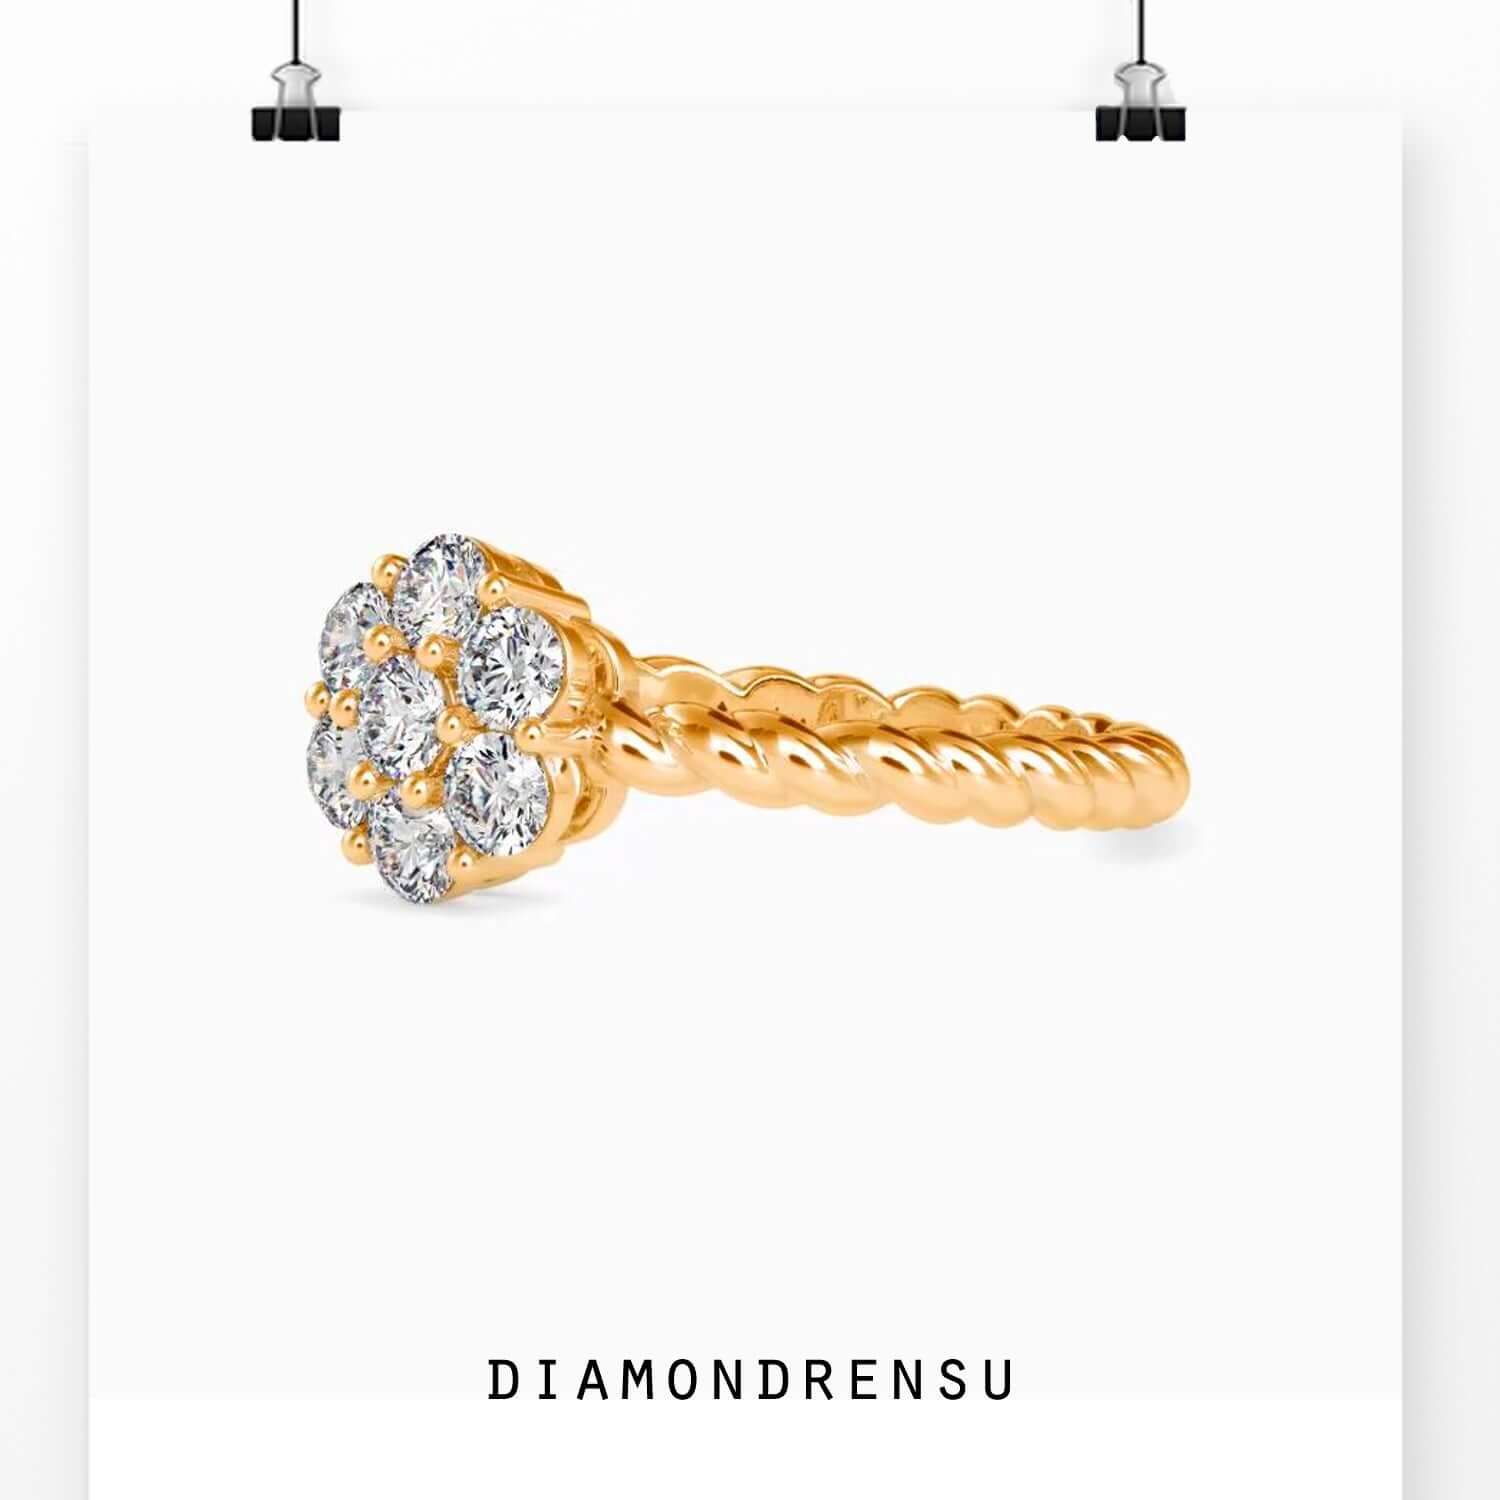 customized moissanite jewelry - diamondrensu